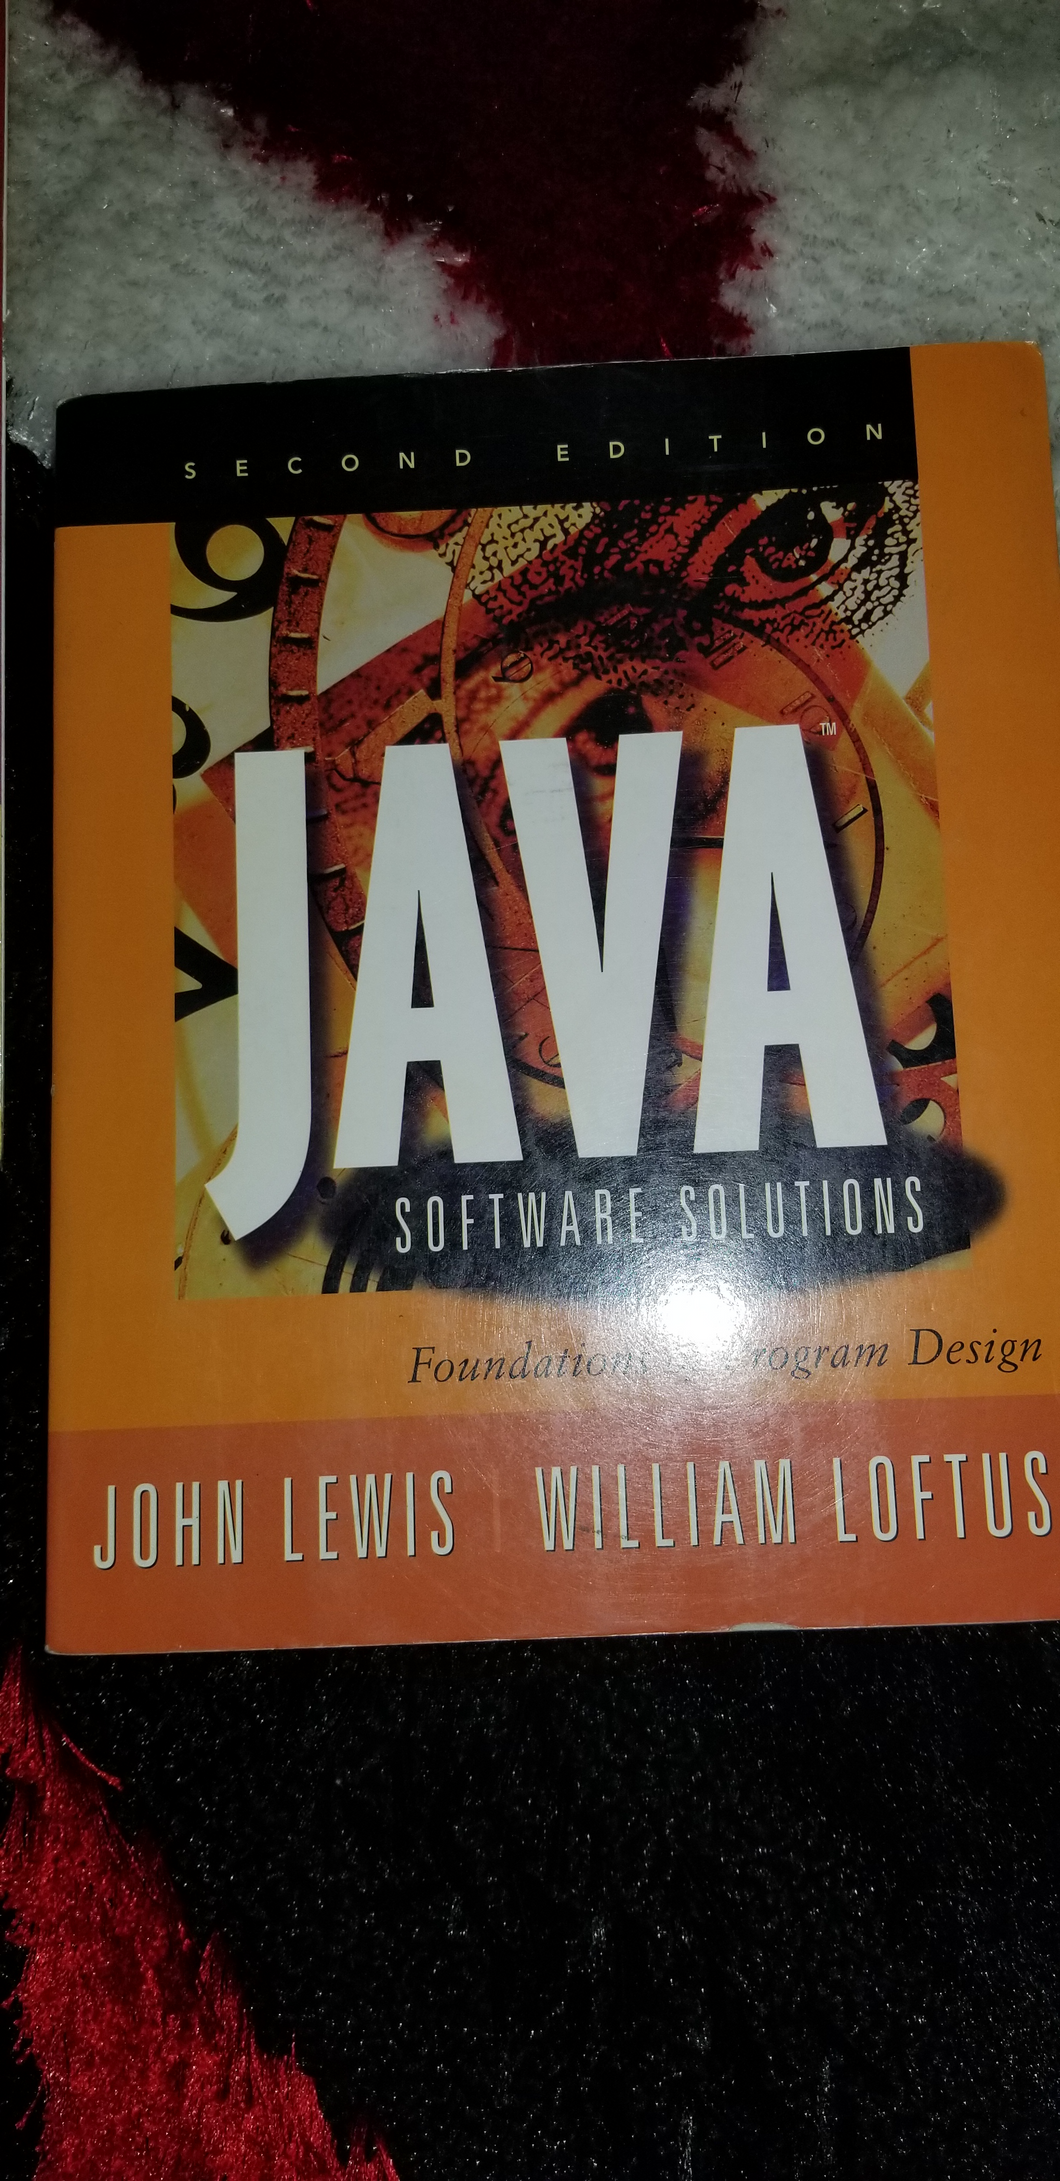 Java Software Solutions - Foundations of Program Design William Loftus and John Lewis - Perfume Gallery